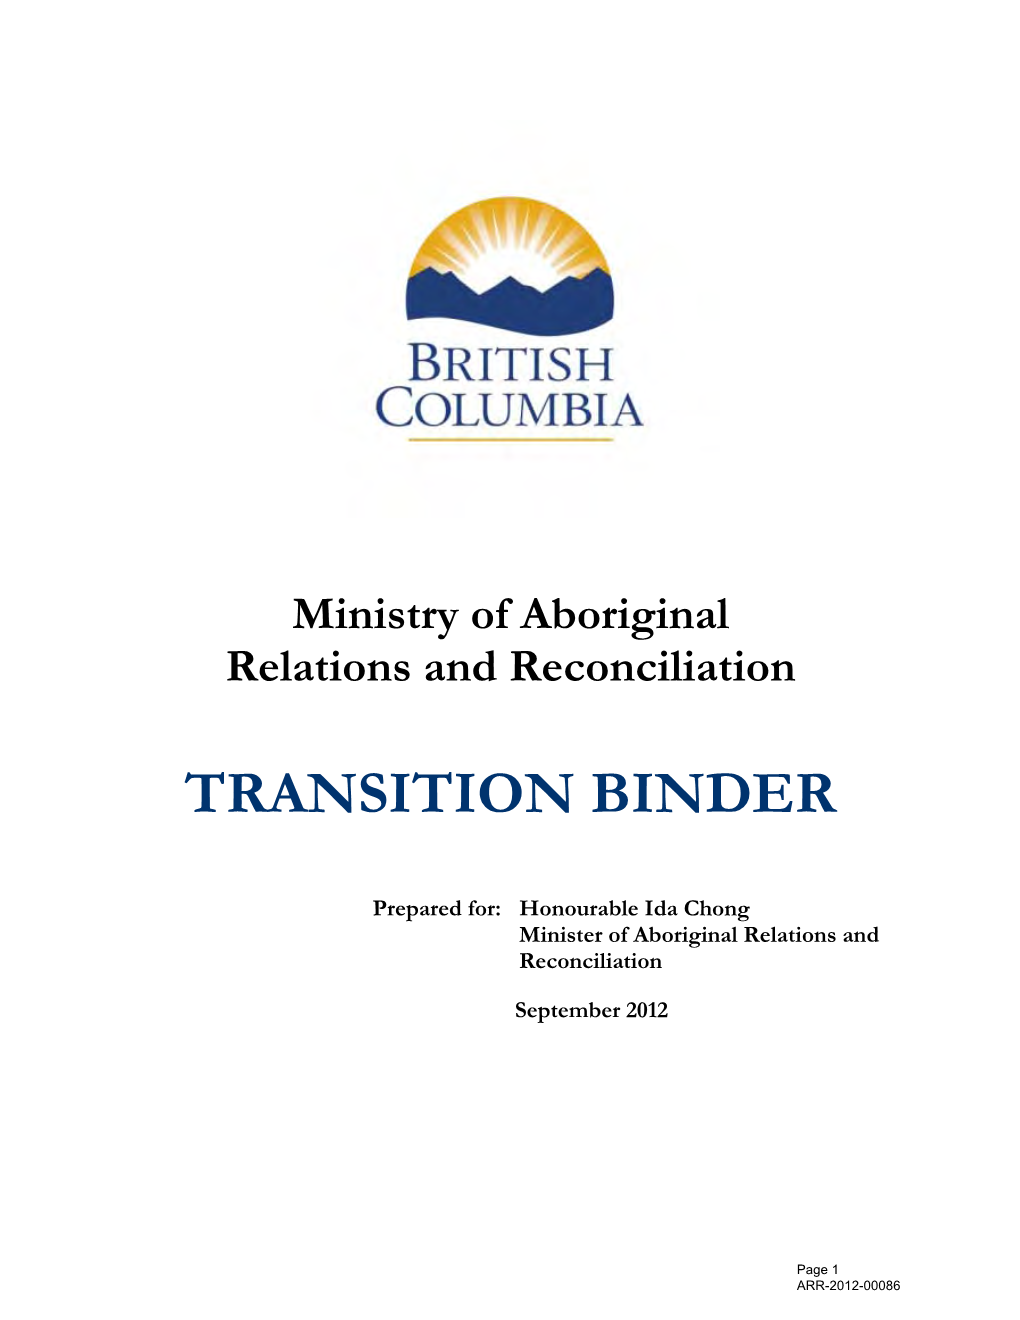 Transition Binder